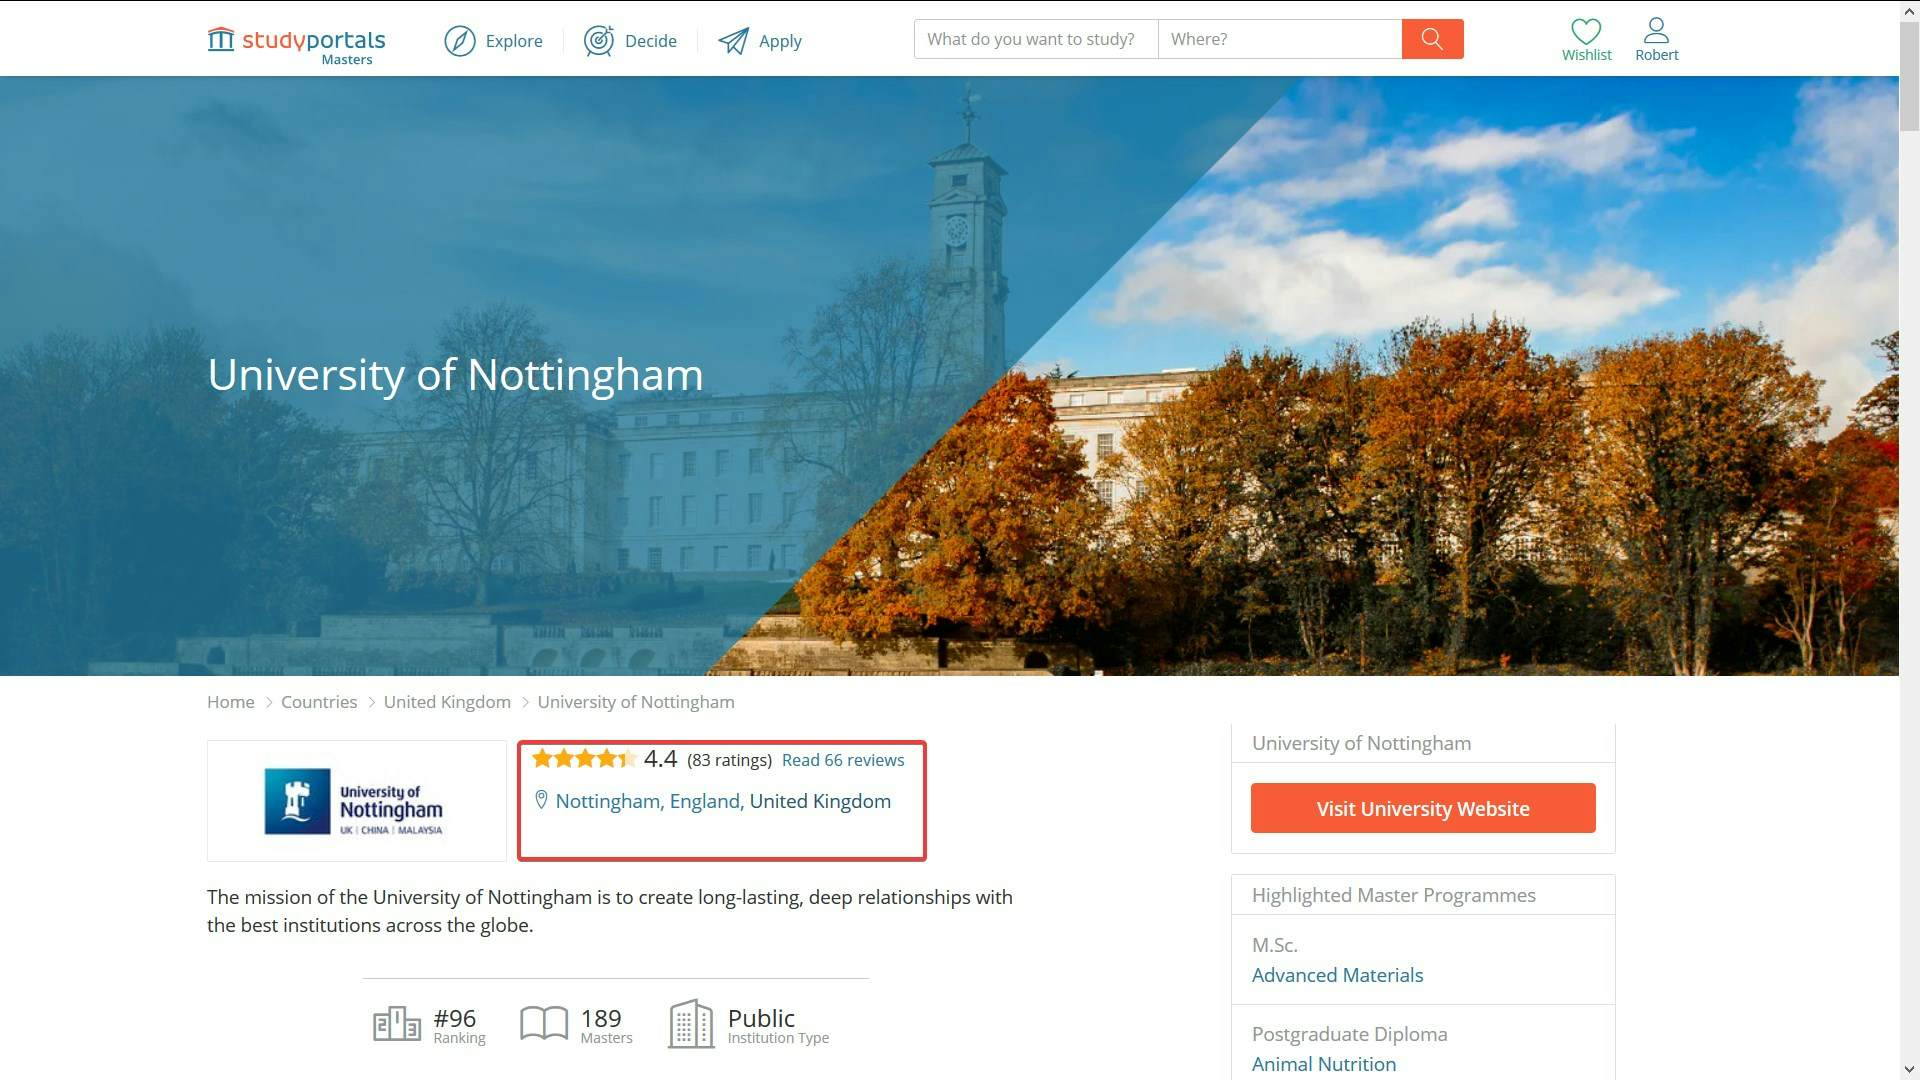 Student reviews of universities on Studyportals' websites